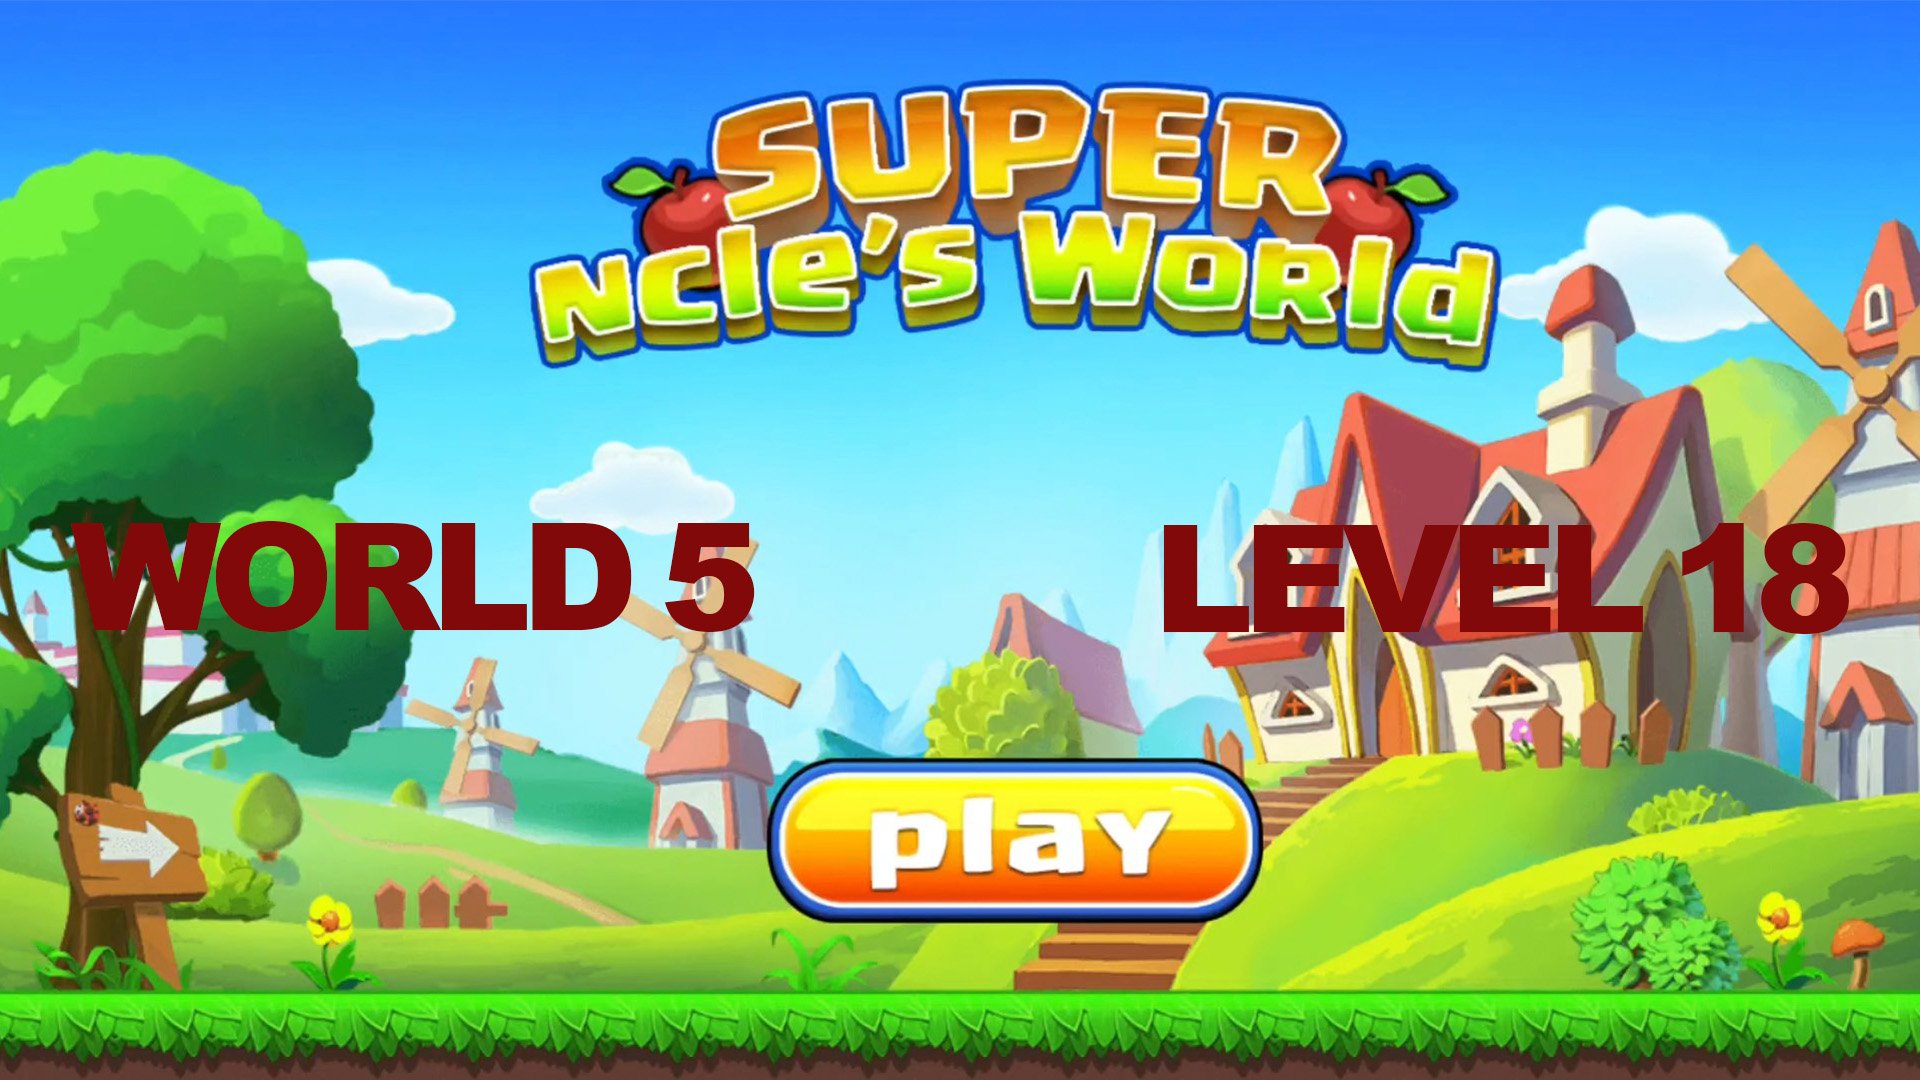 Super ncle's  World 5. Level 18.